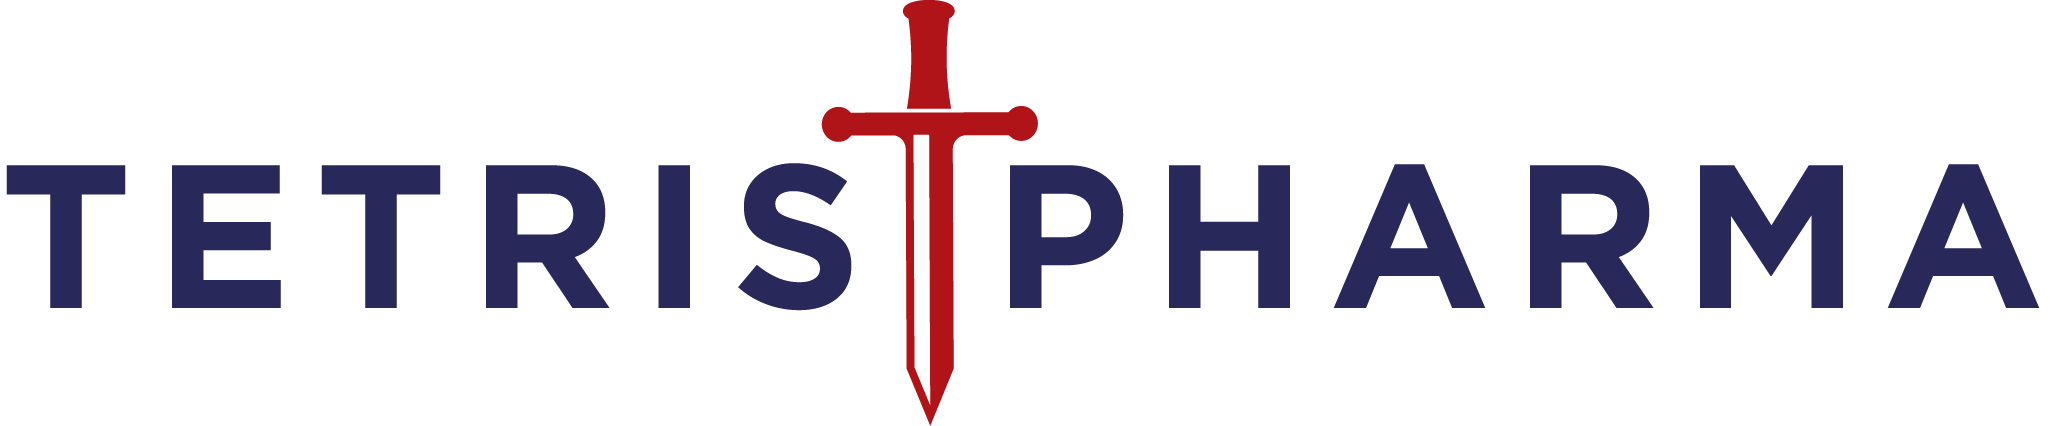 Tetris Pharma logo.png